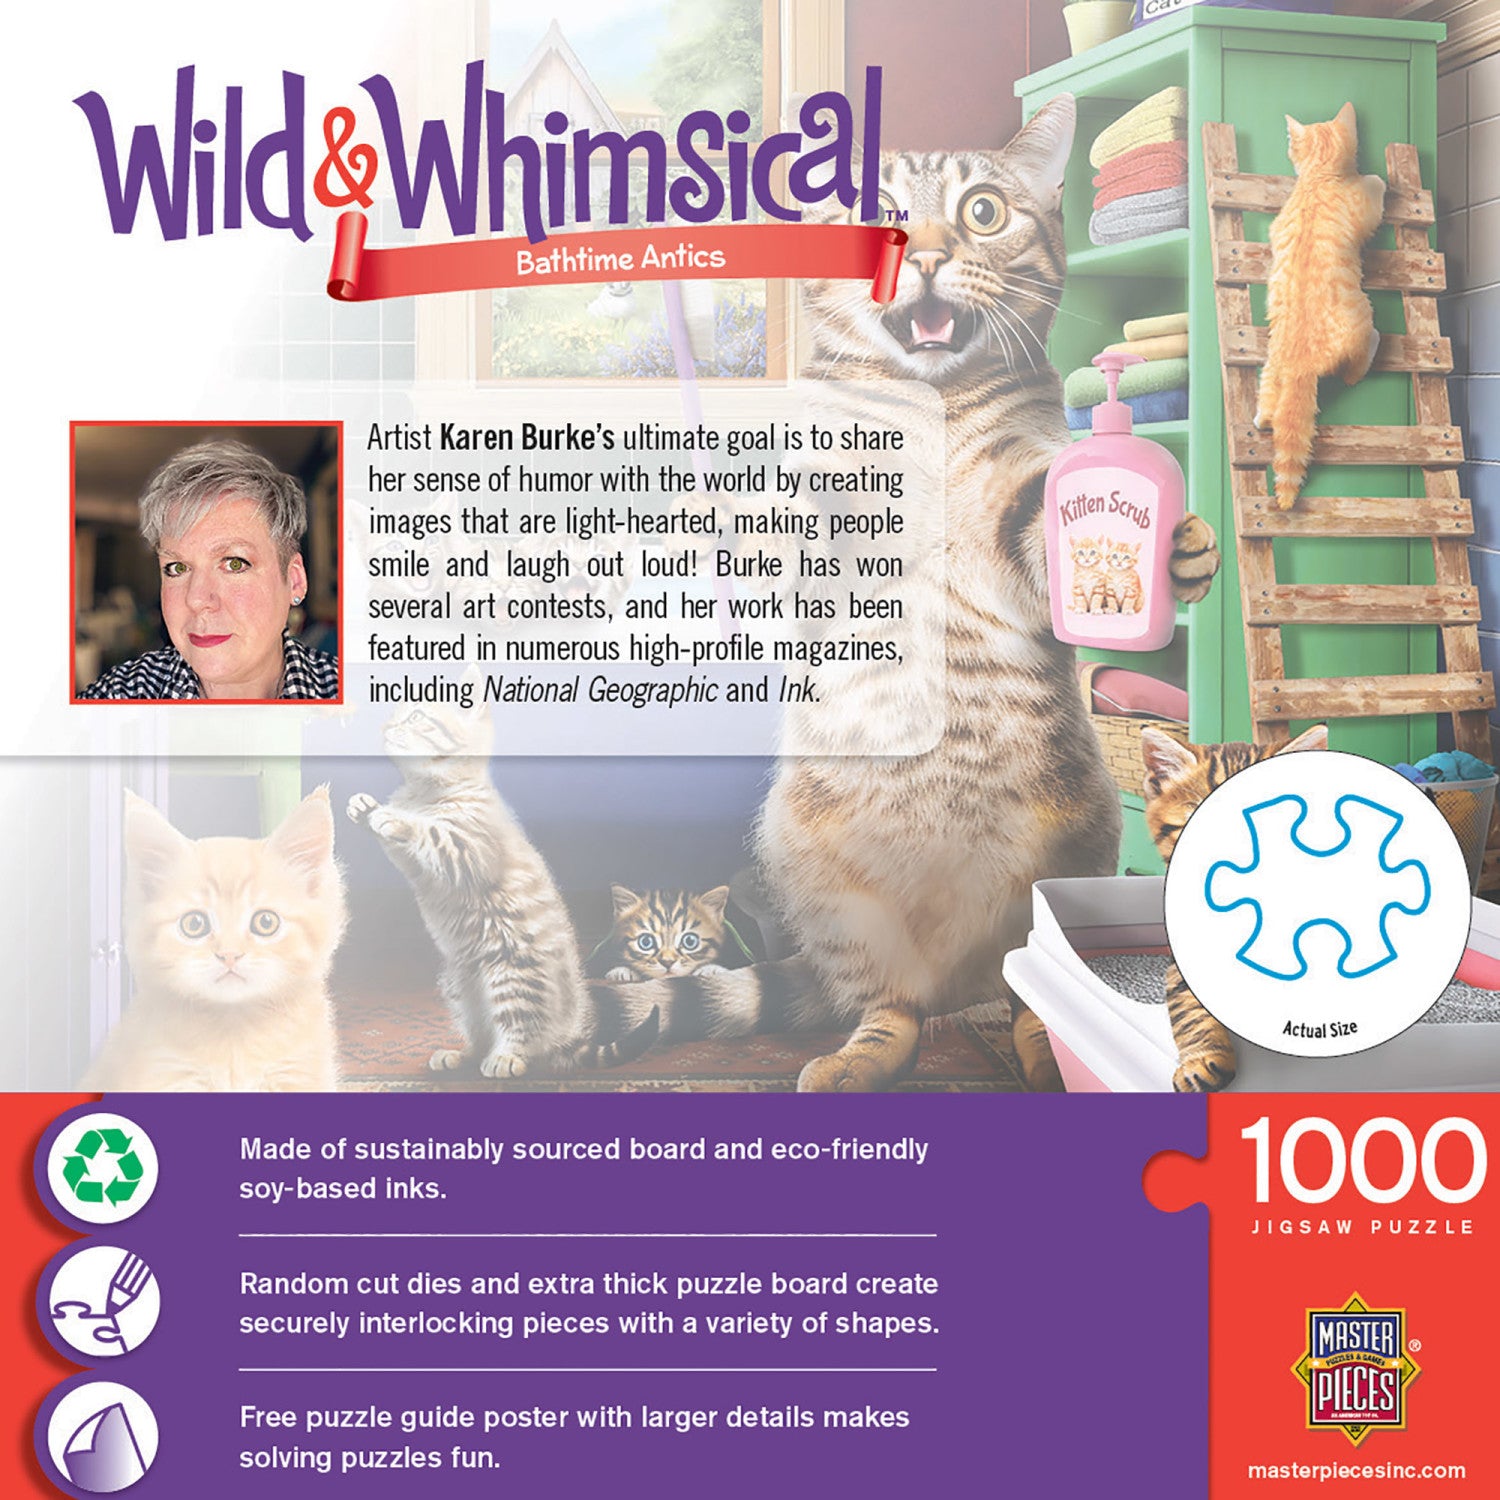 Wild & Whimsical - Bathtime Antics 1000 Piece Jigsaw Puzzle